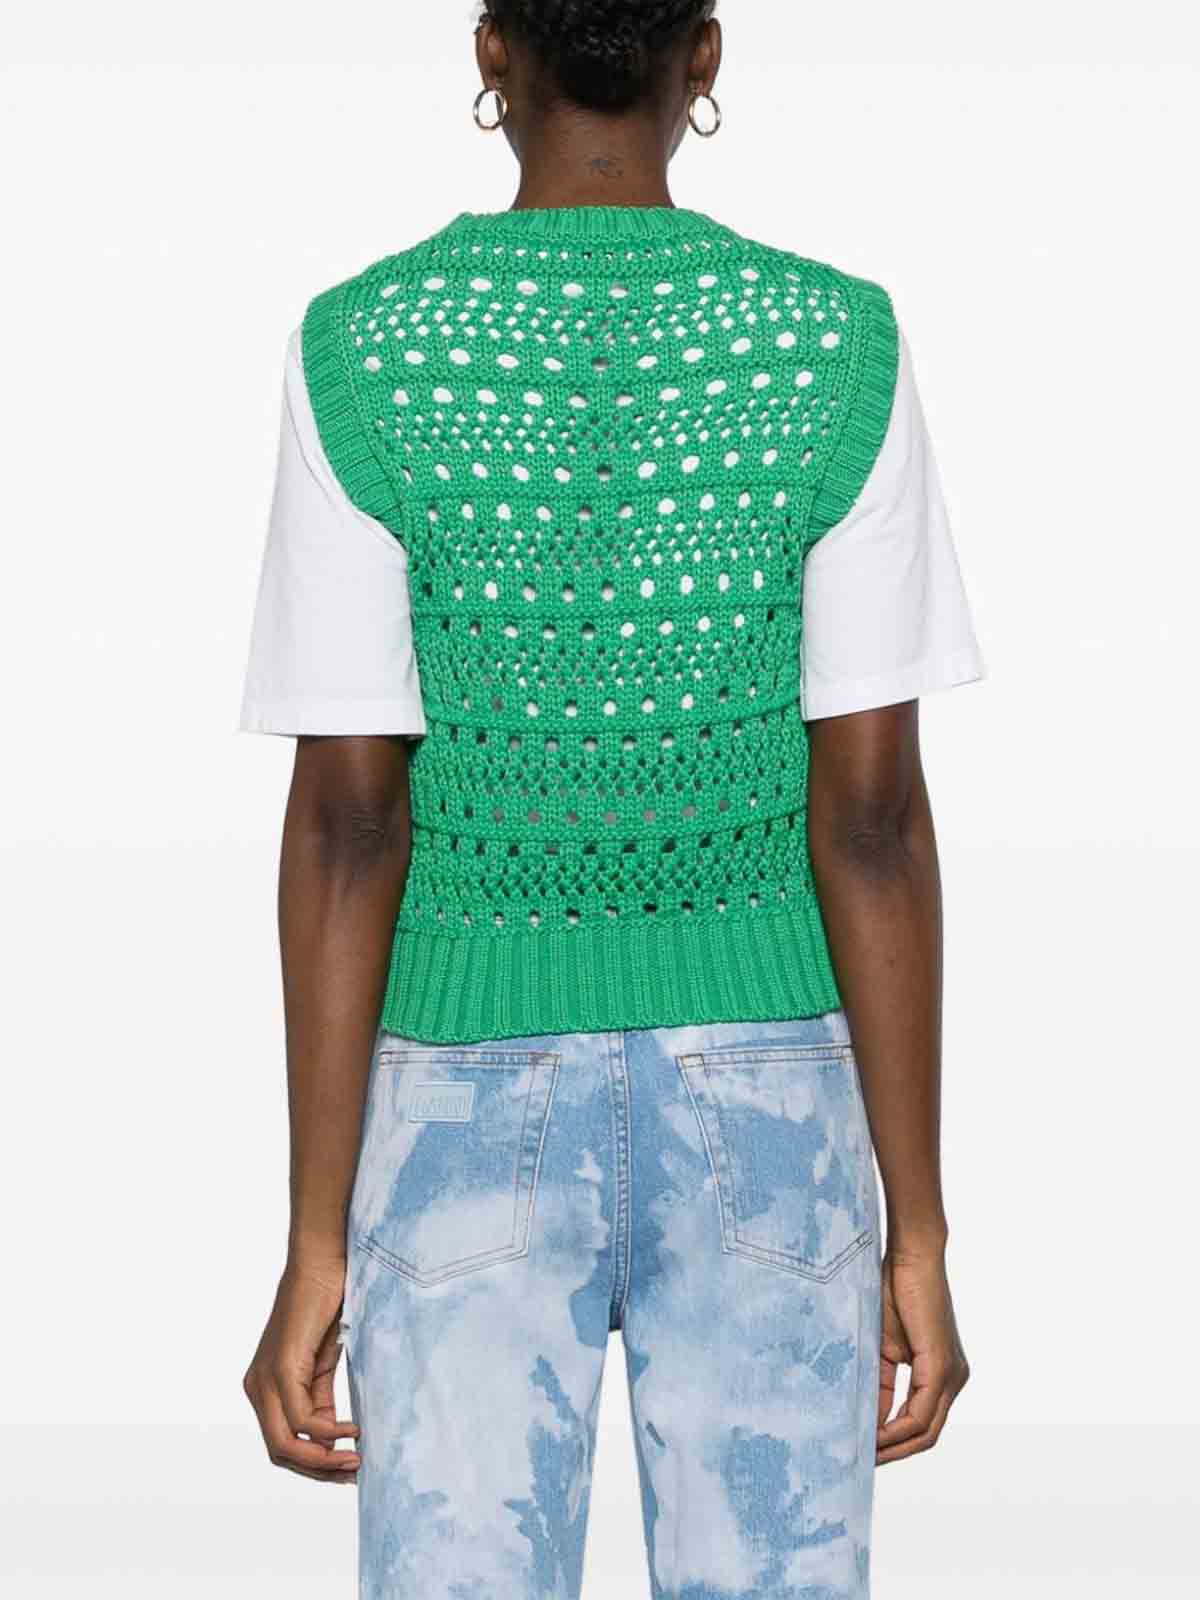 Shop Ganni Bright Green Crochet Knit Top